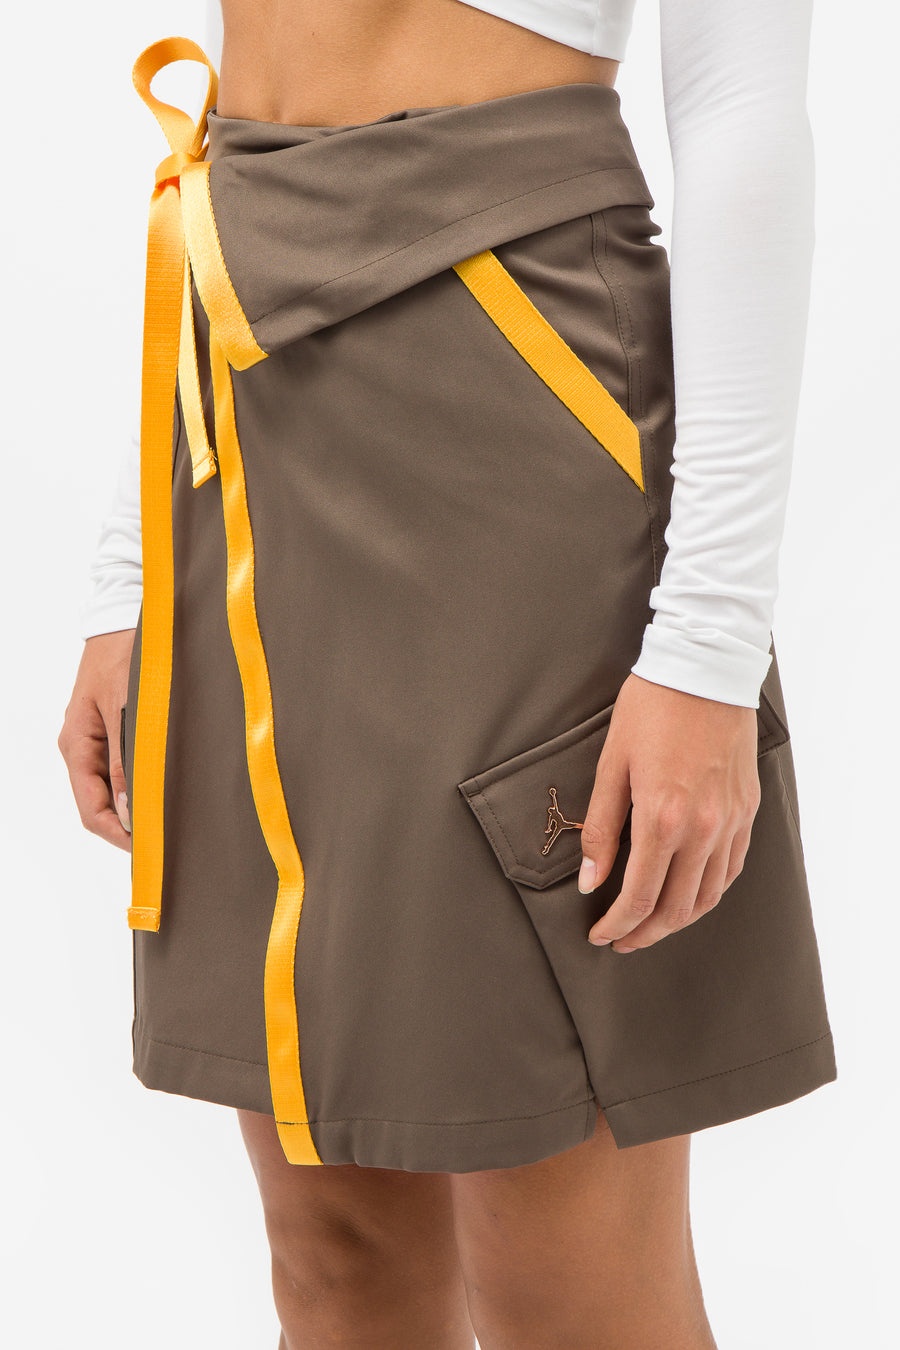 Utility Future Primal Skirt in Ironstone - 4